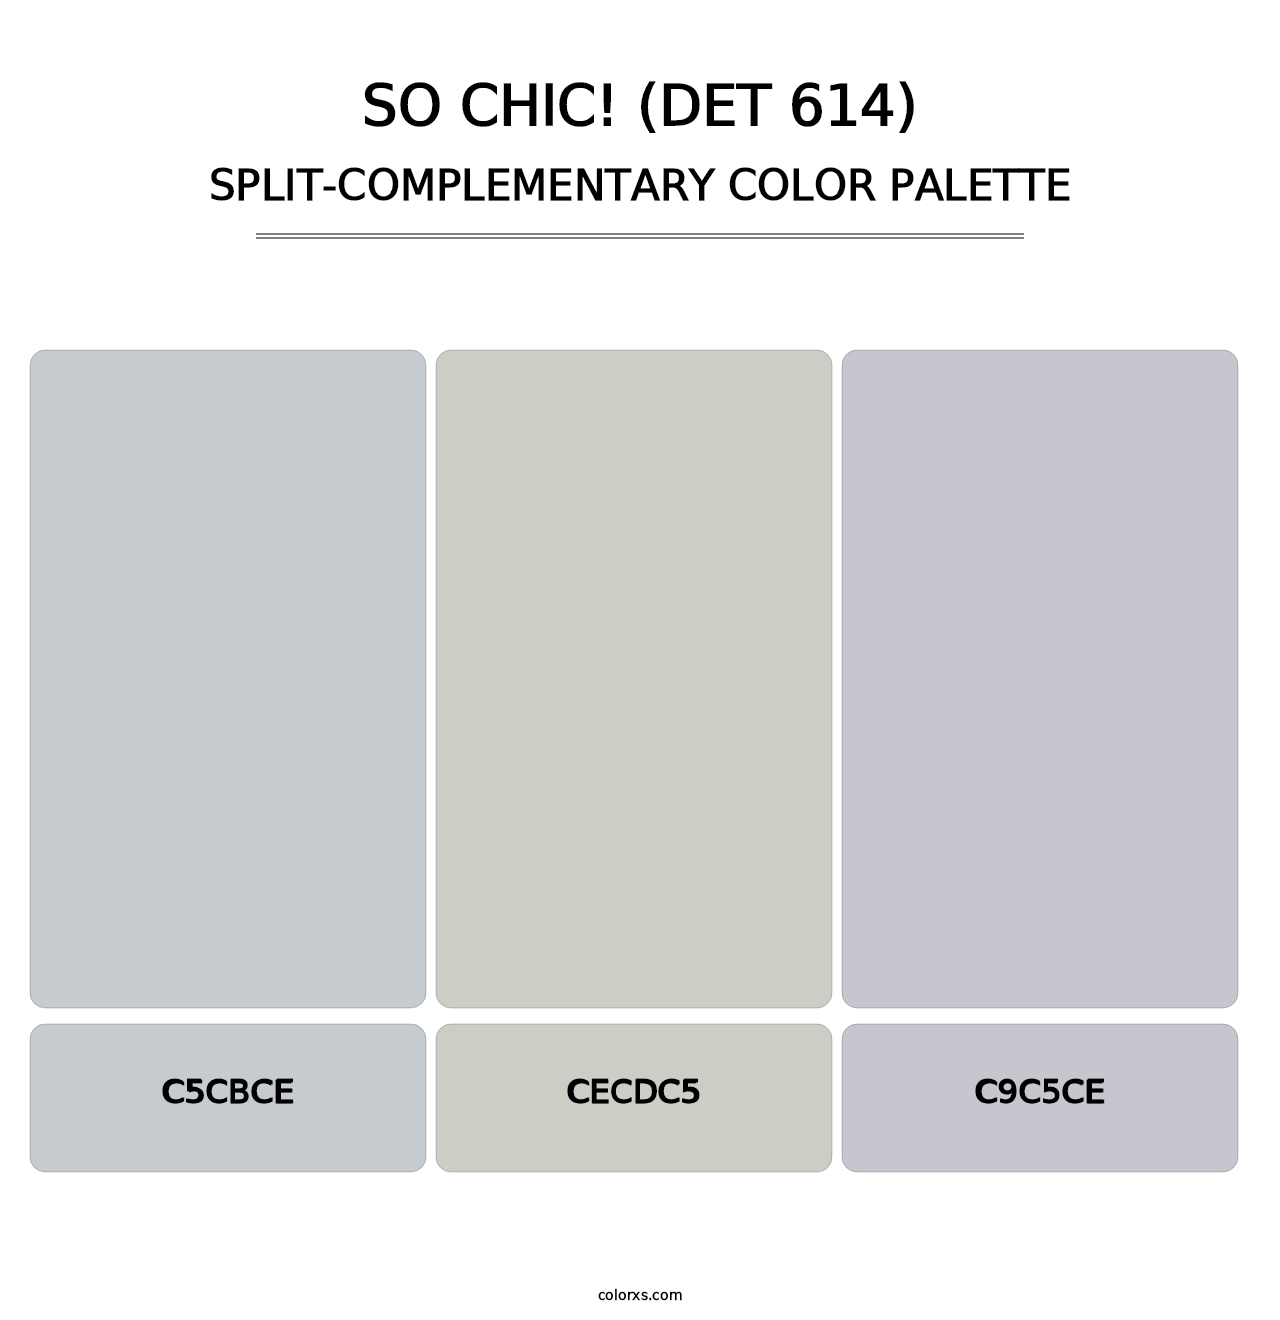 So Chic! (DET 614) - Split-Complementary Color Palette